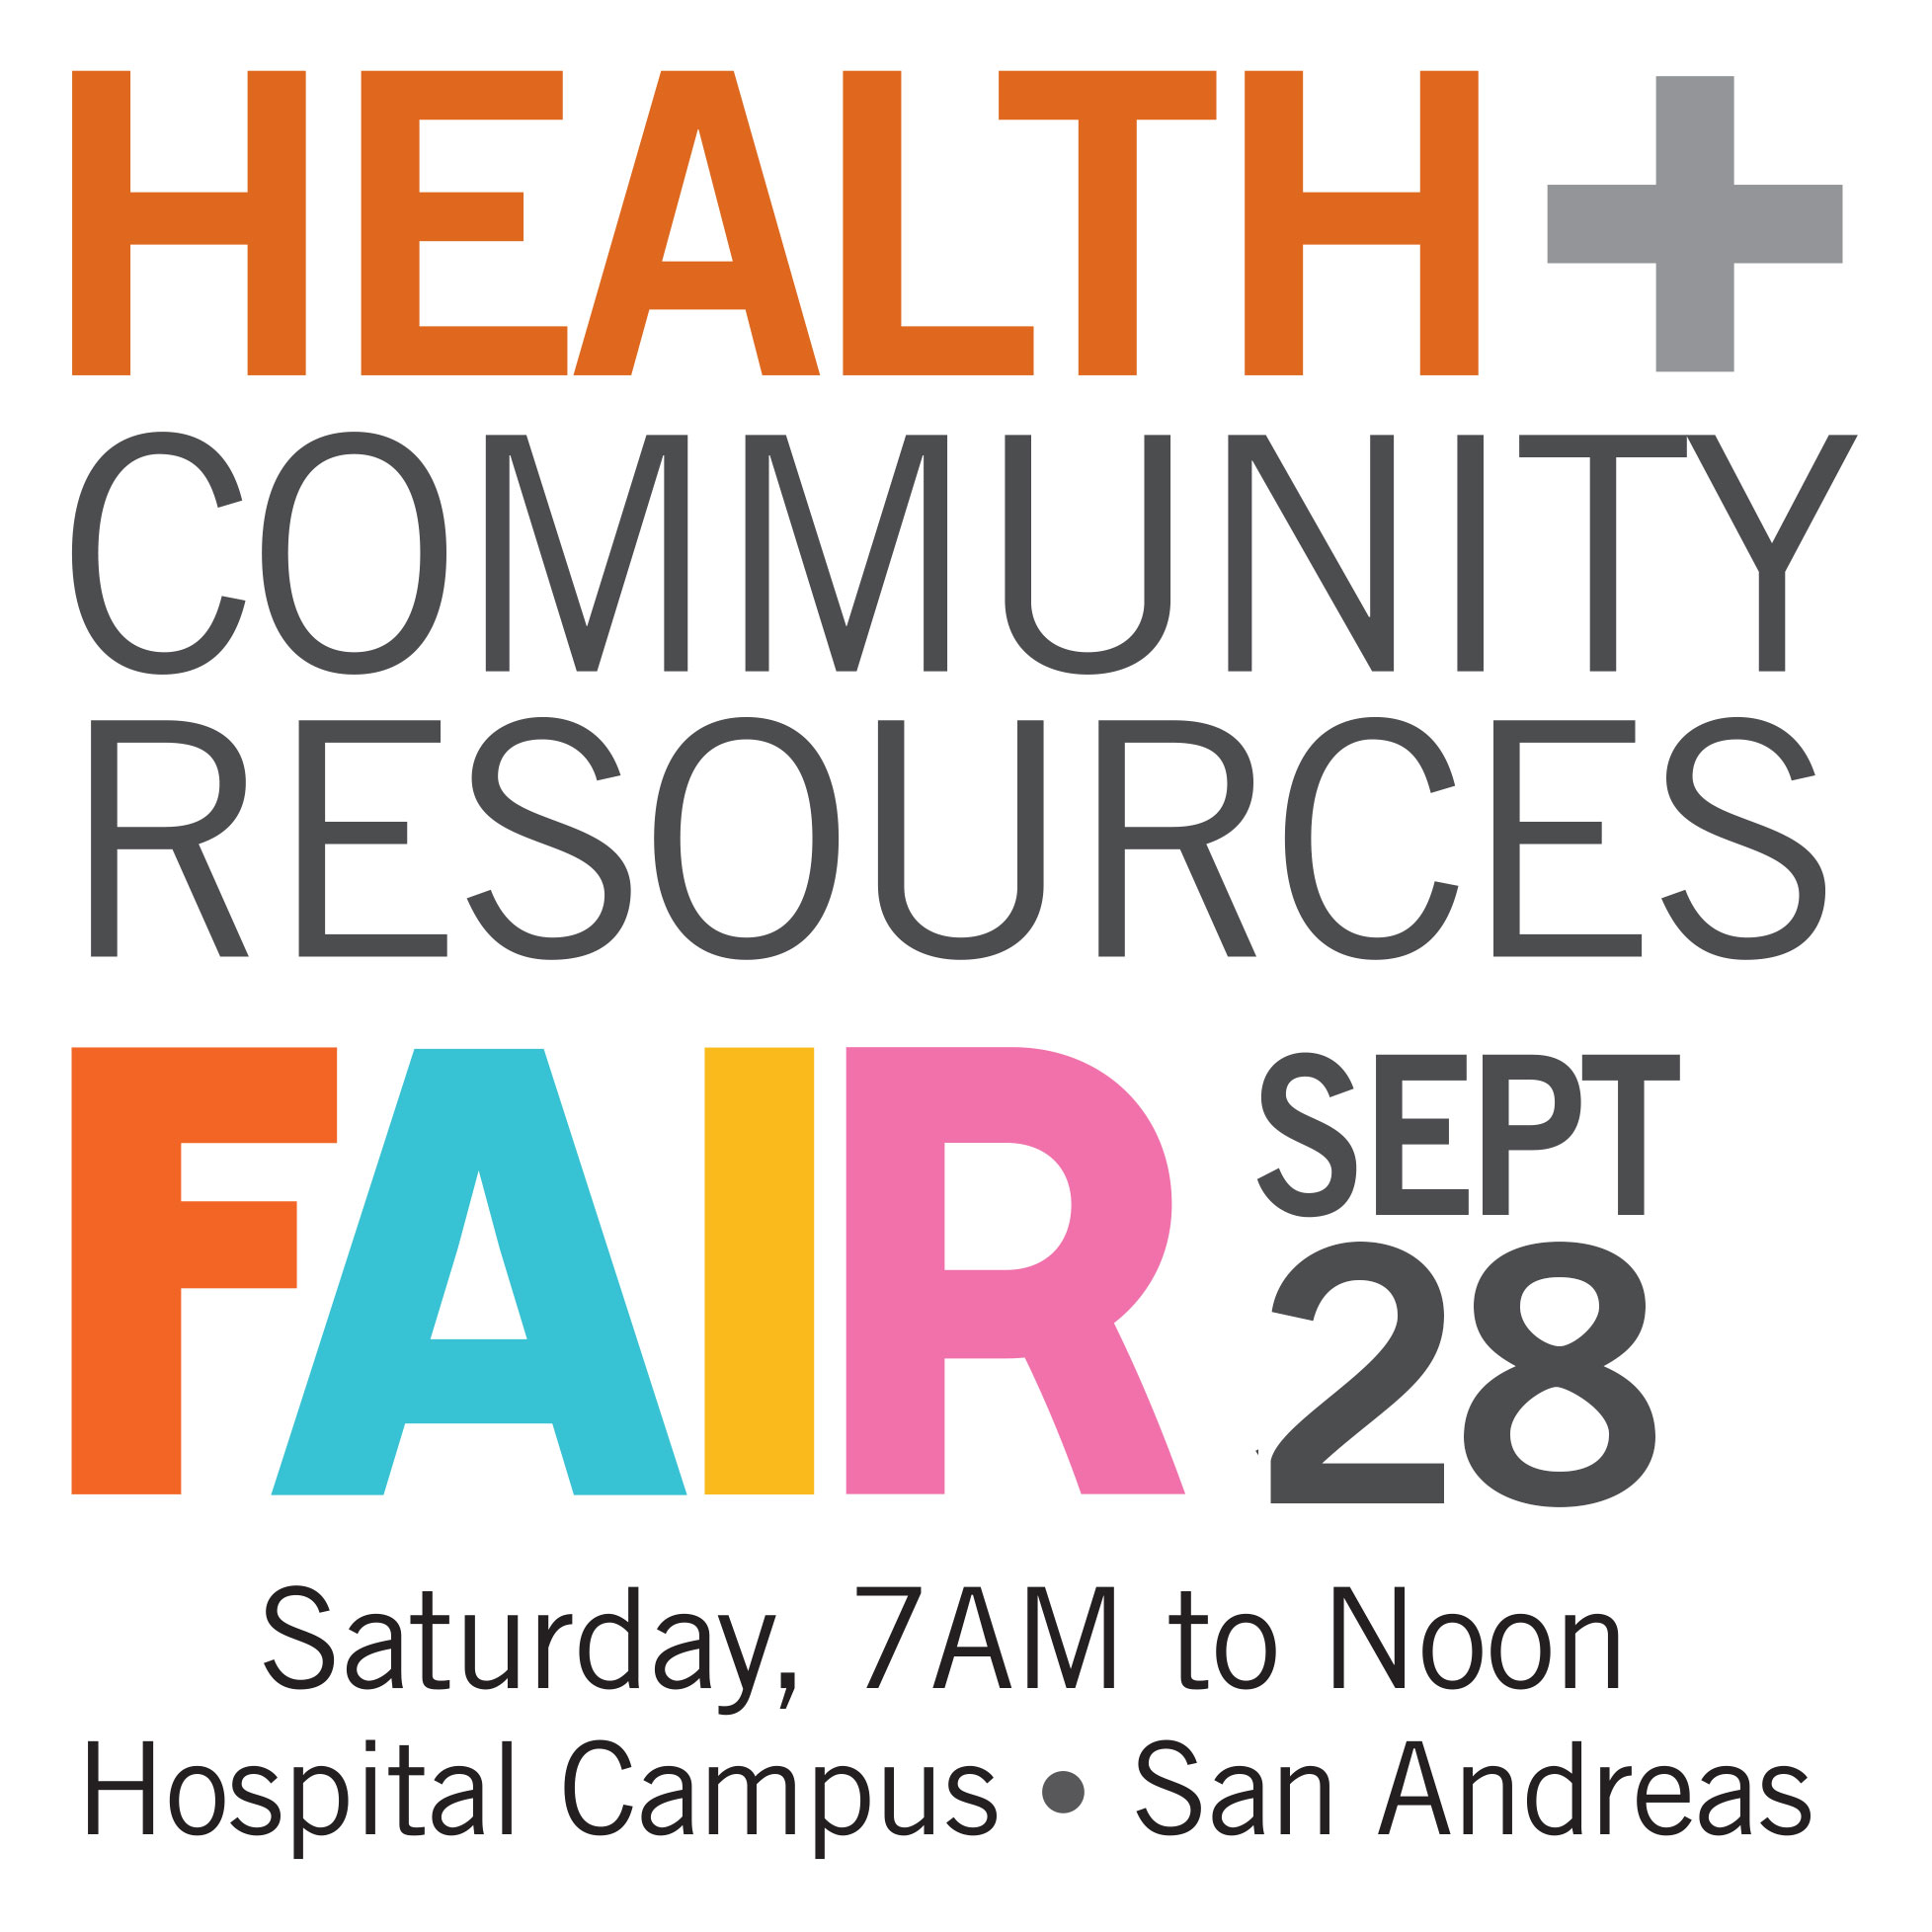 Health Community Fair Text Graphic